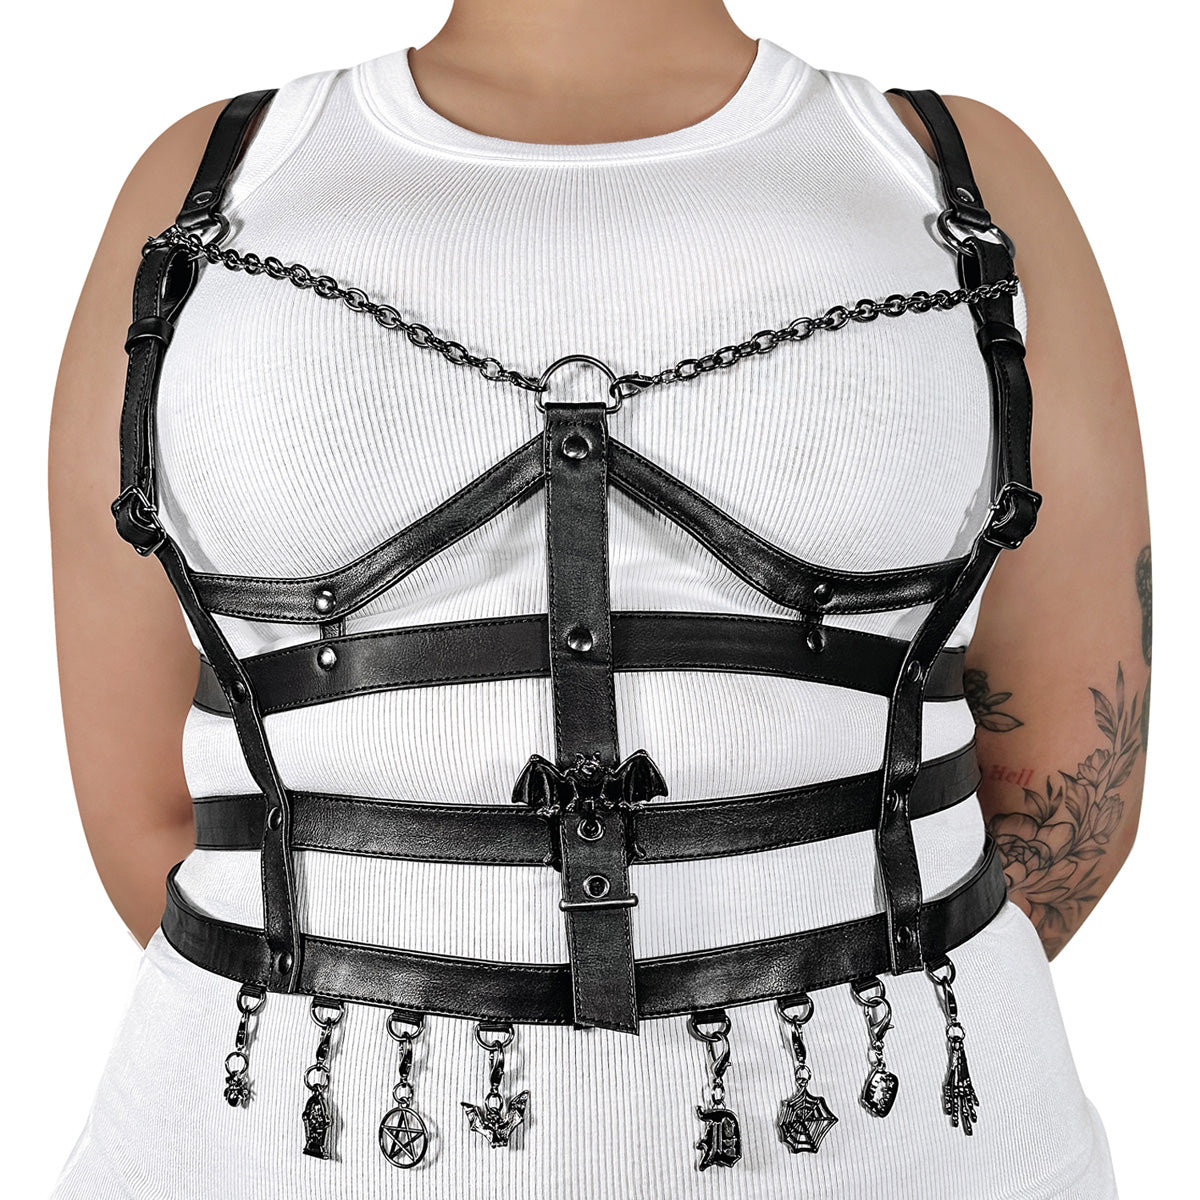 DemoniaCult DA 118 - Cage Body Harness